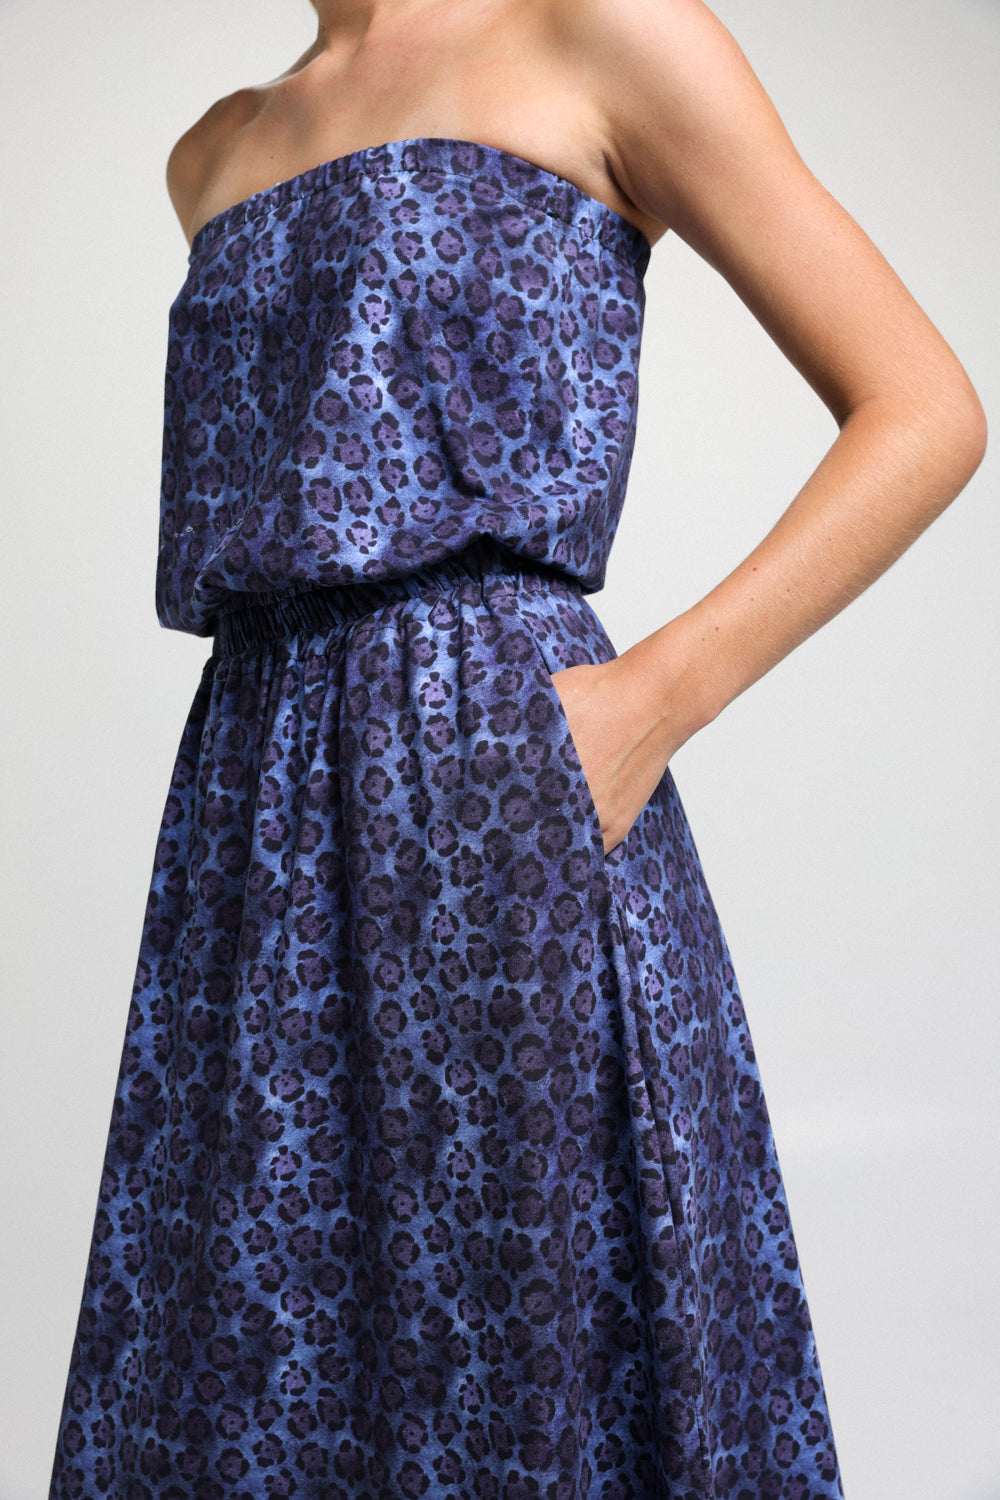 Her Strapless Blue Leopard Dress